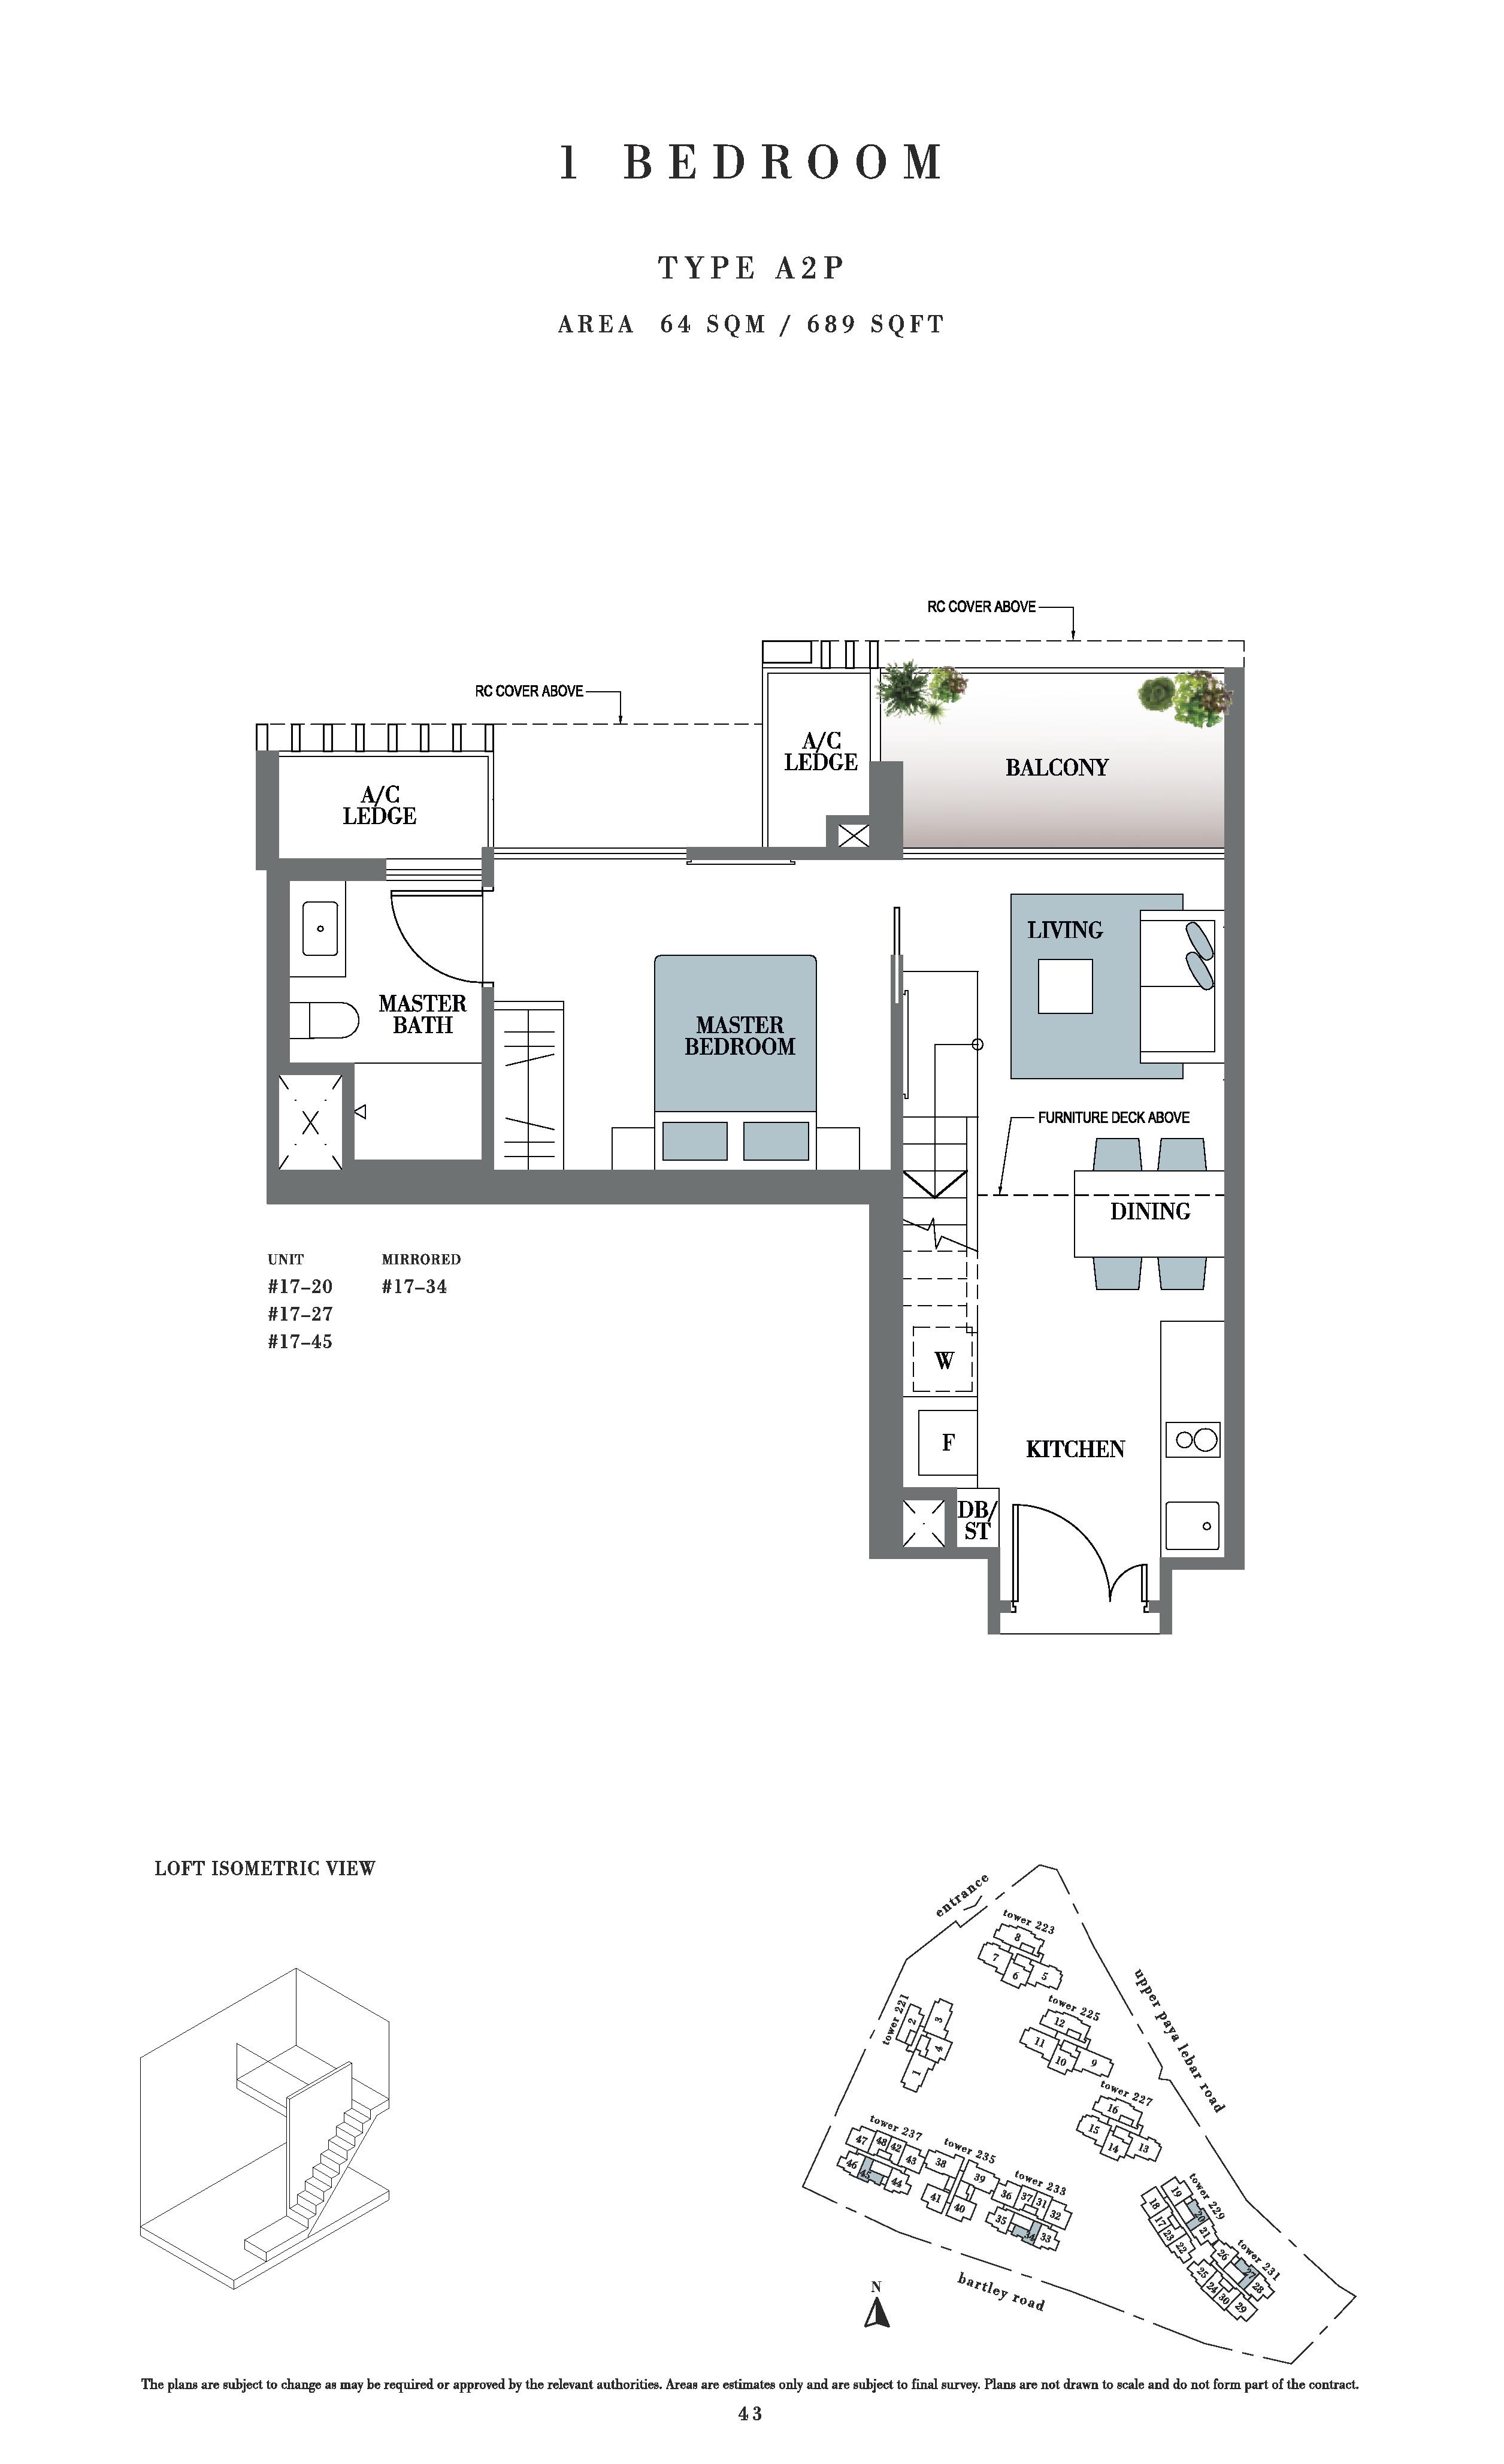 Botanique @ bartley 1 Bedroom Floor Plans Type A2P